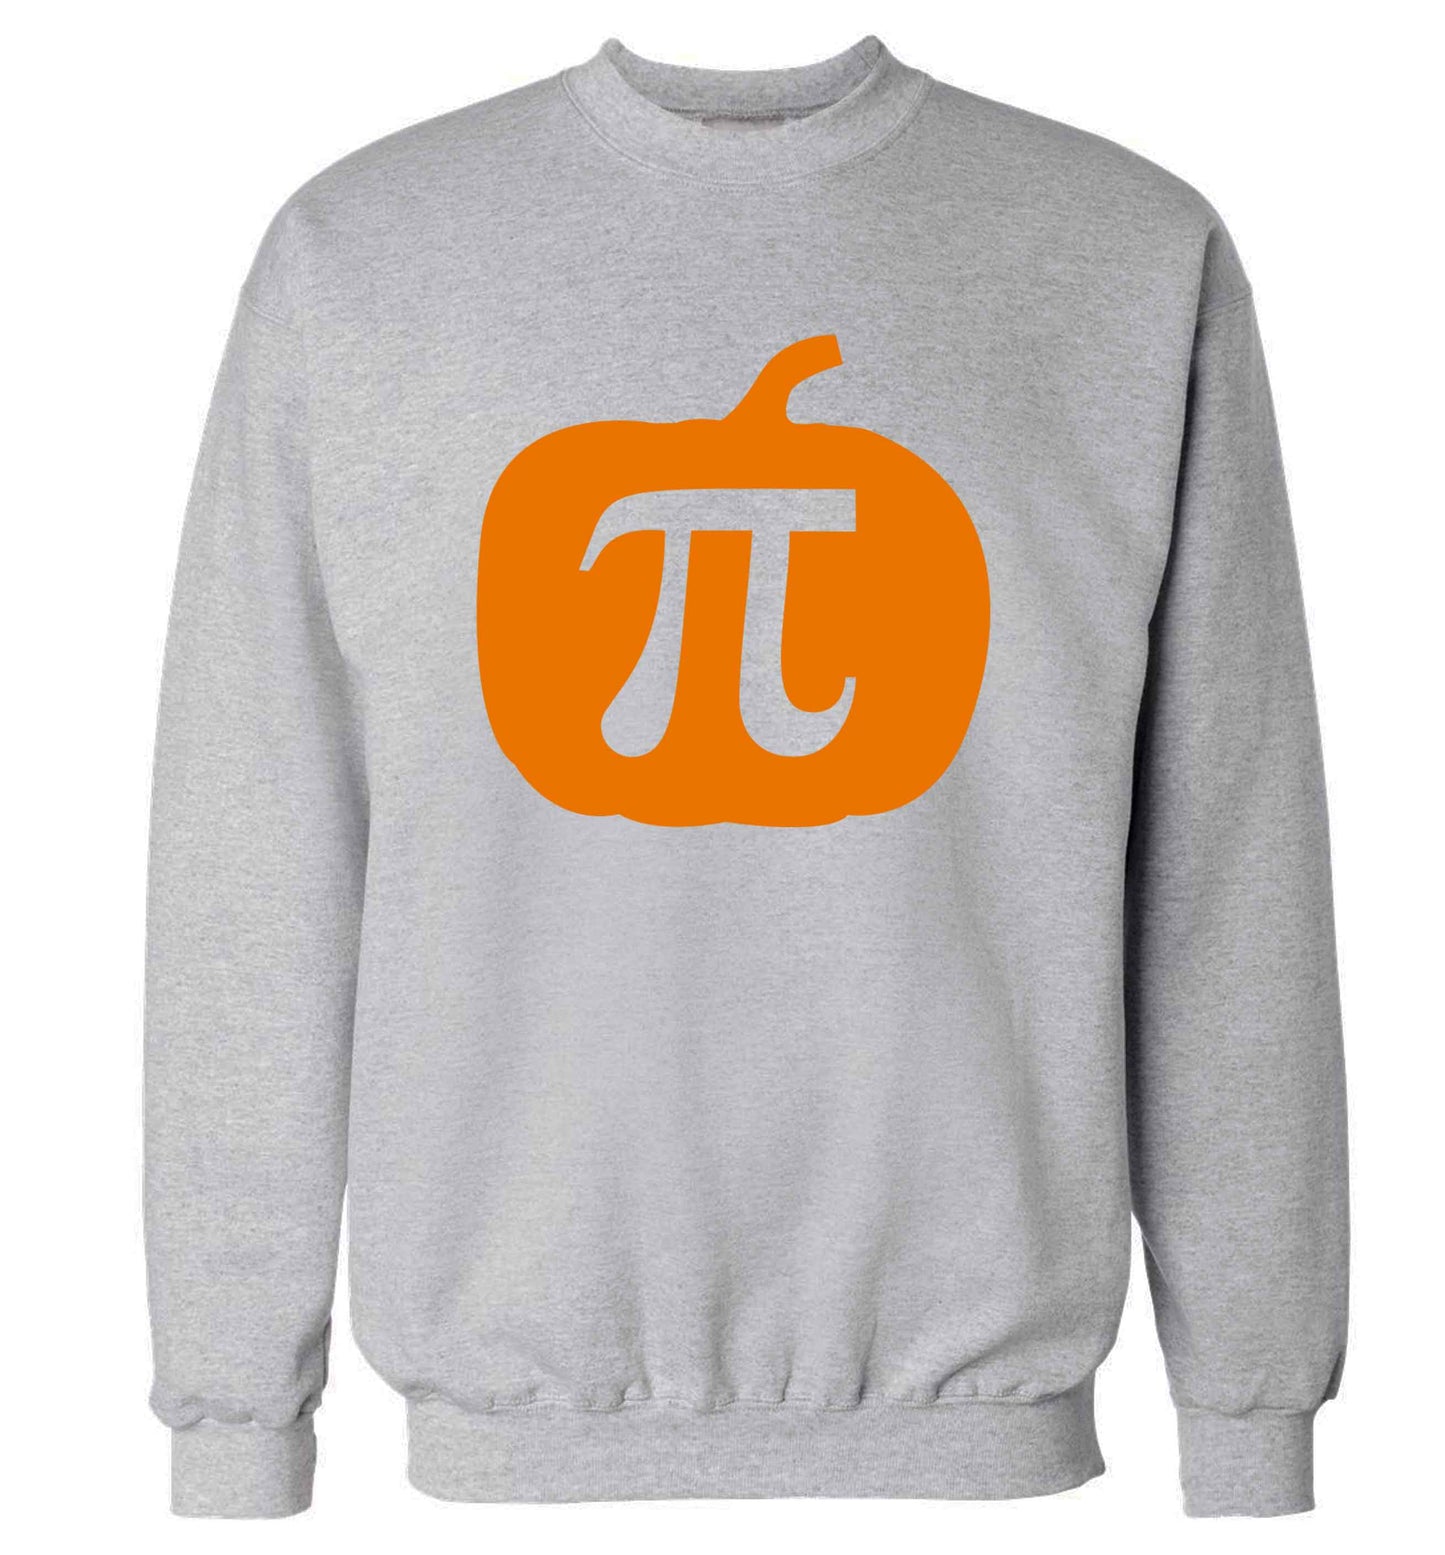 Pumpkin Pie adult's unisex grey sweater 2XL